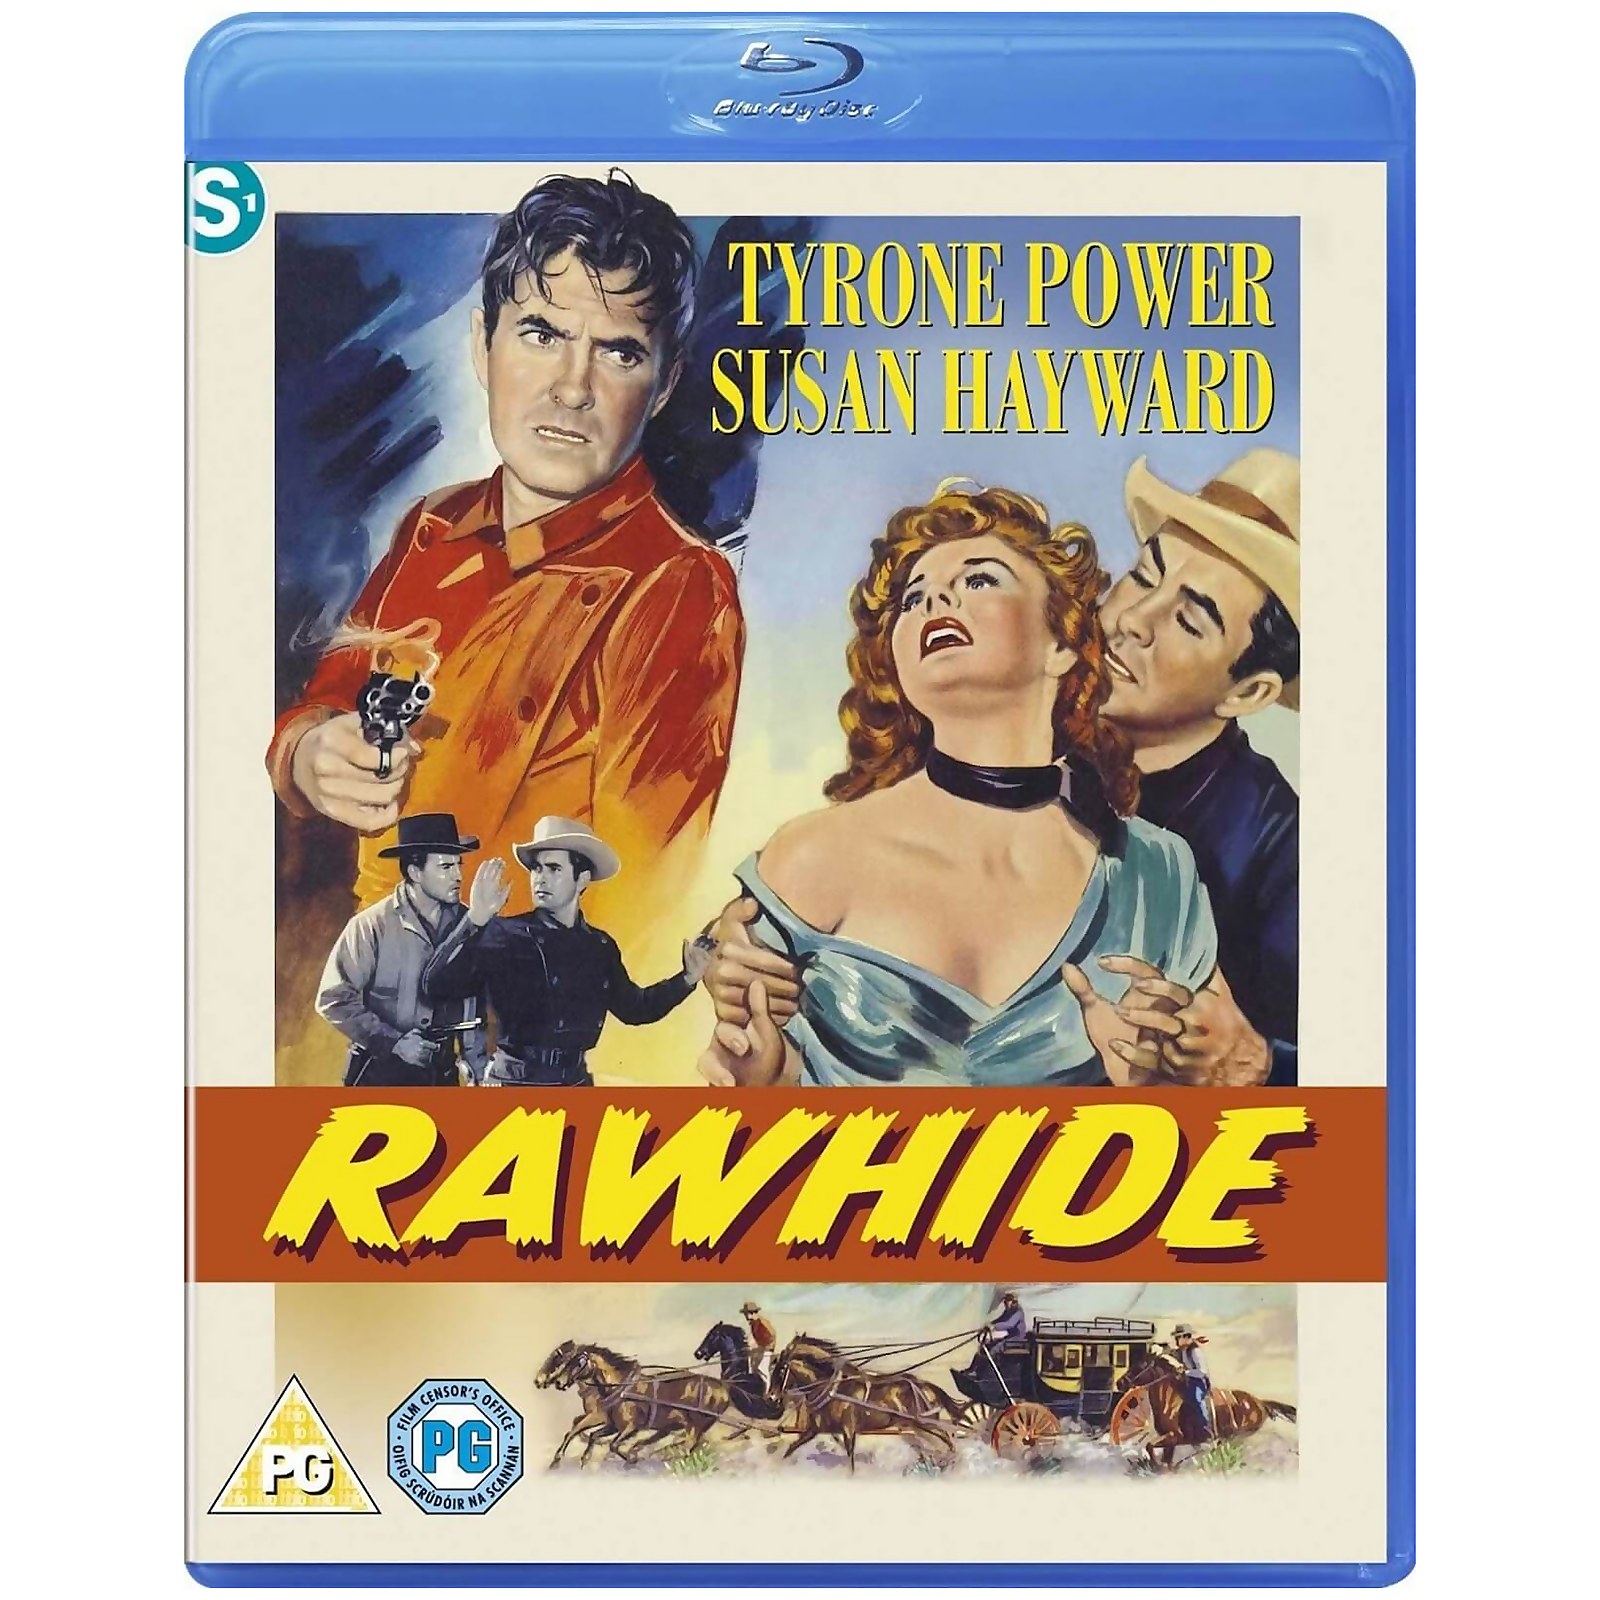 Rawhide [blu-ray], New, Dvd, Free